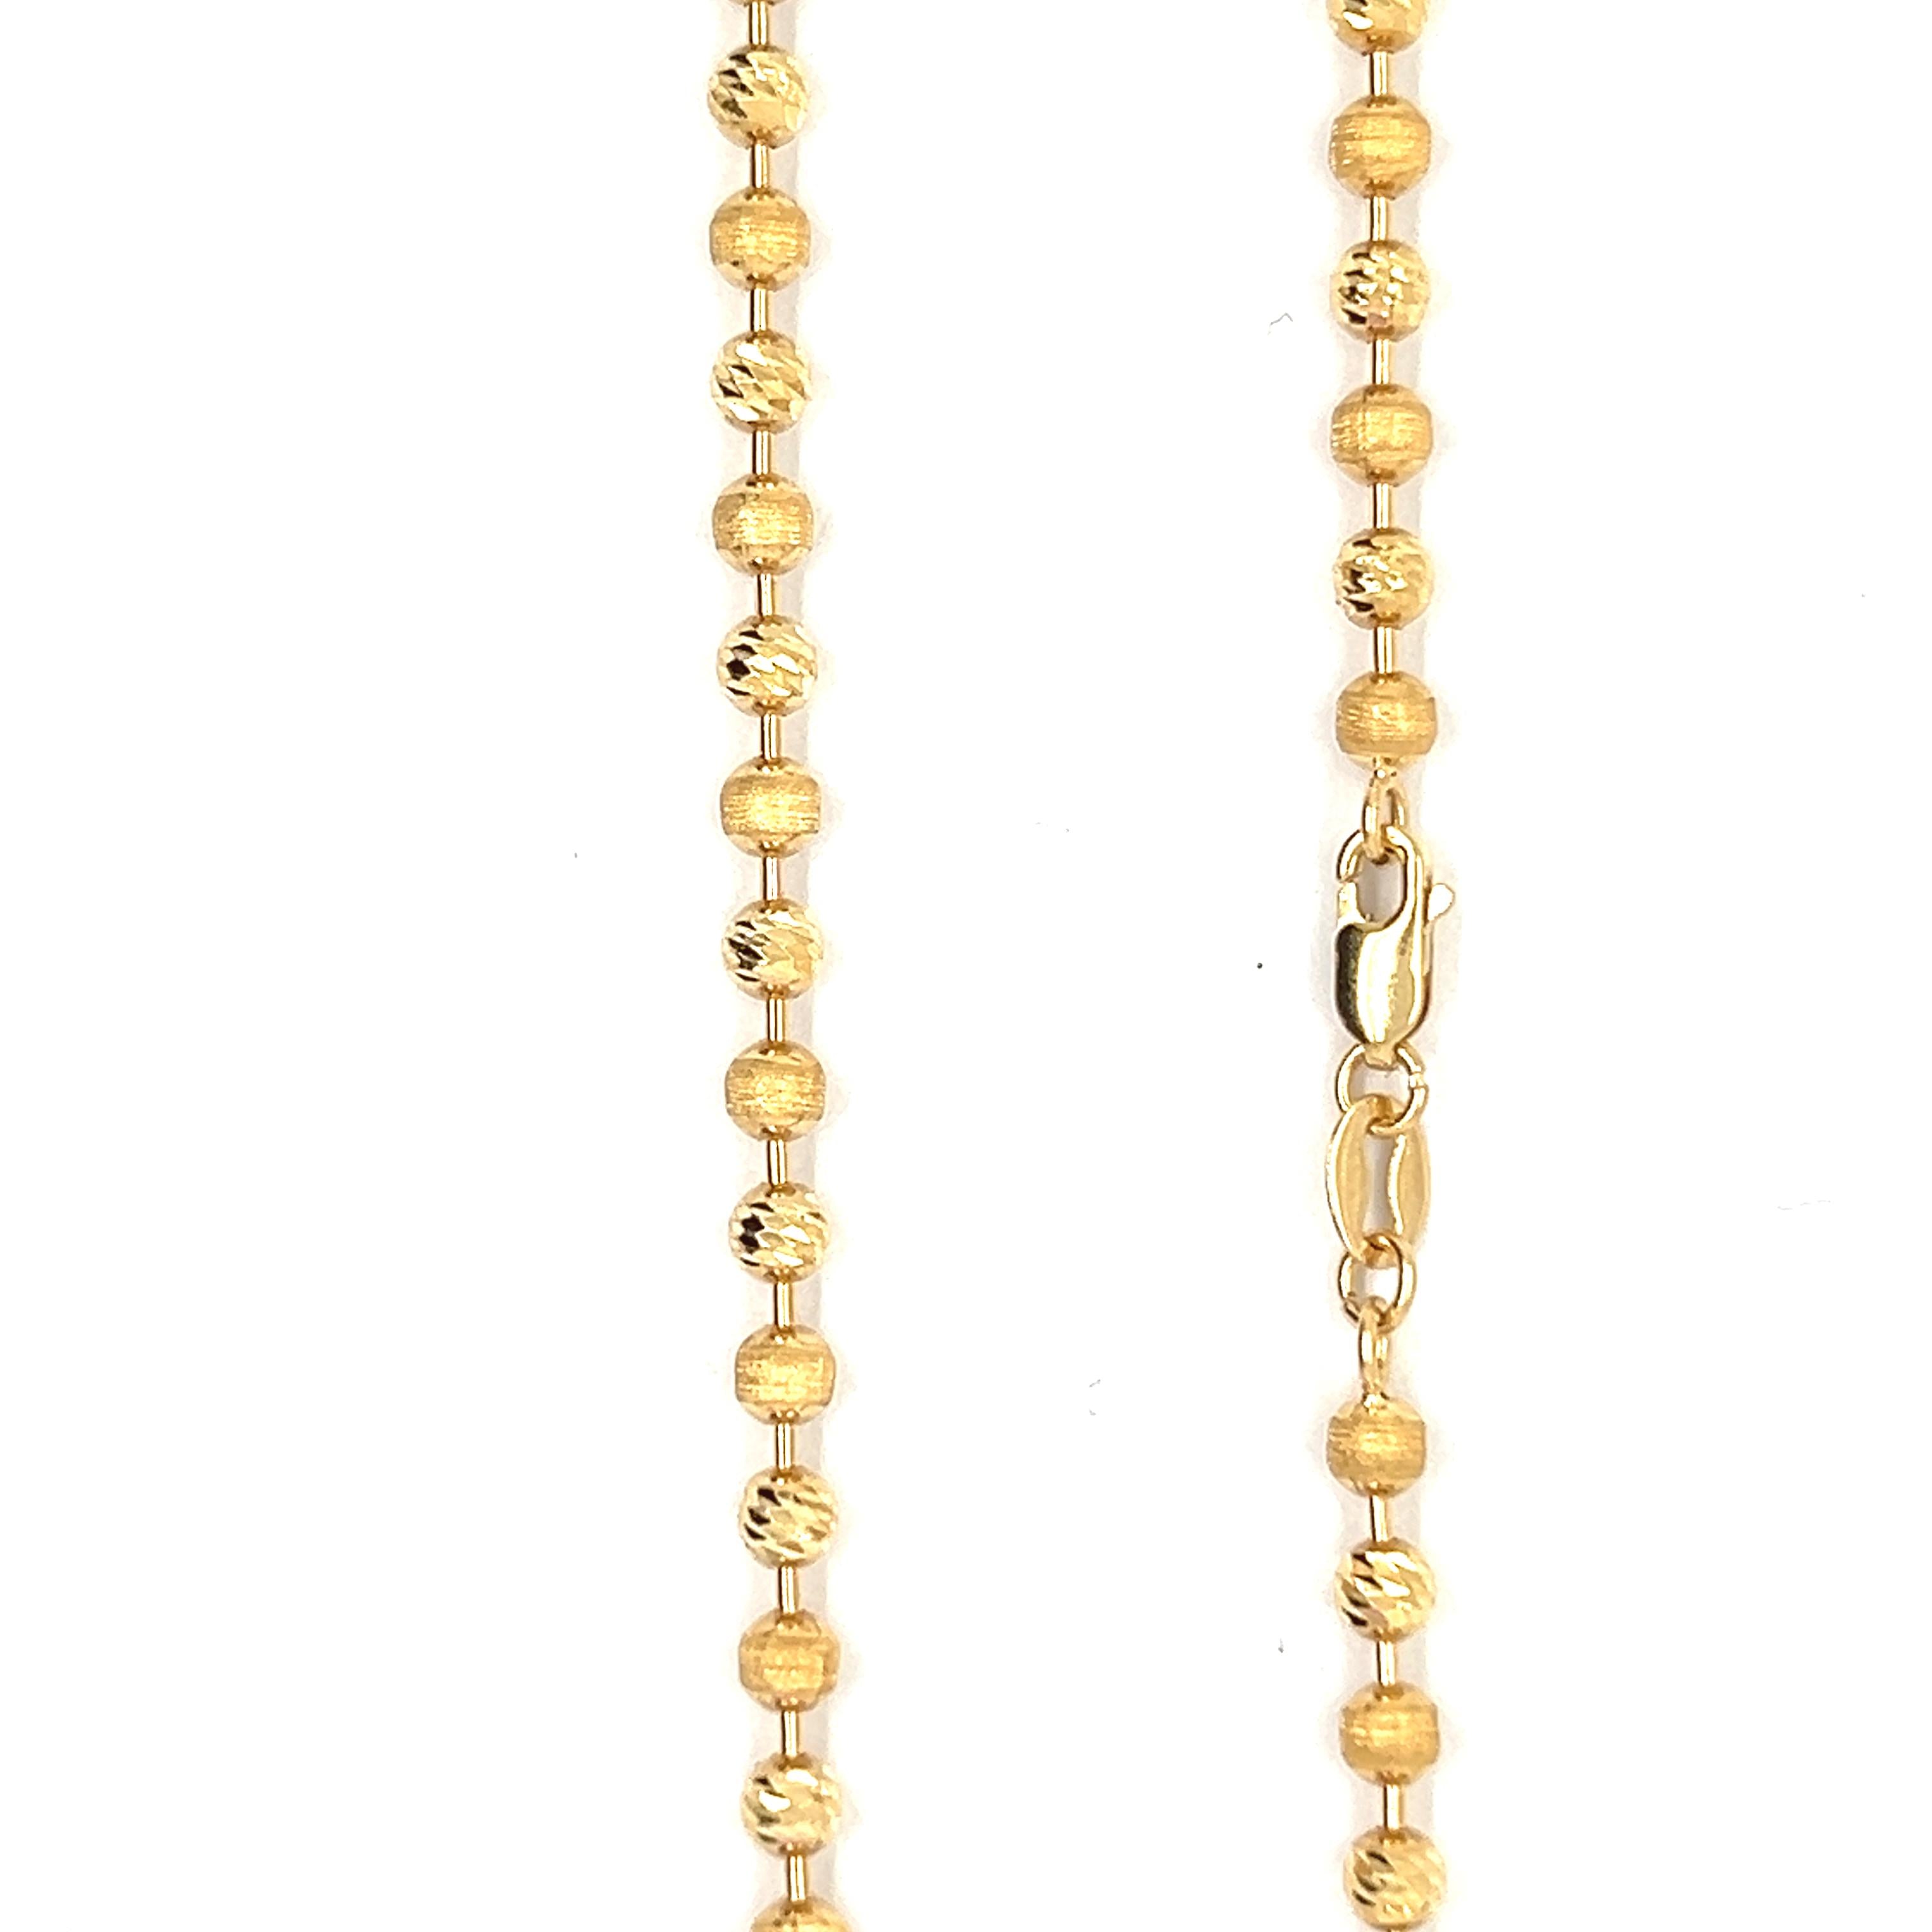 Vintage 16" 14k Gold Textured Ball Chain